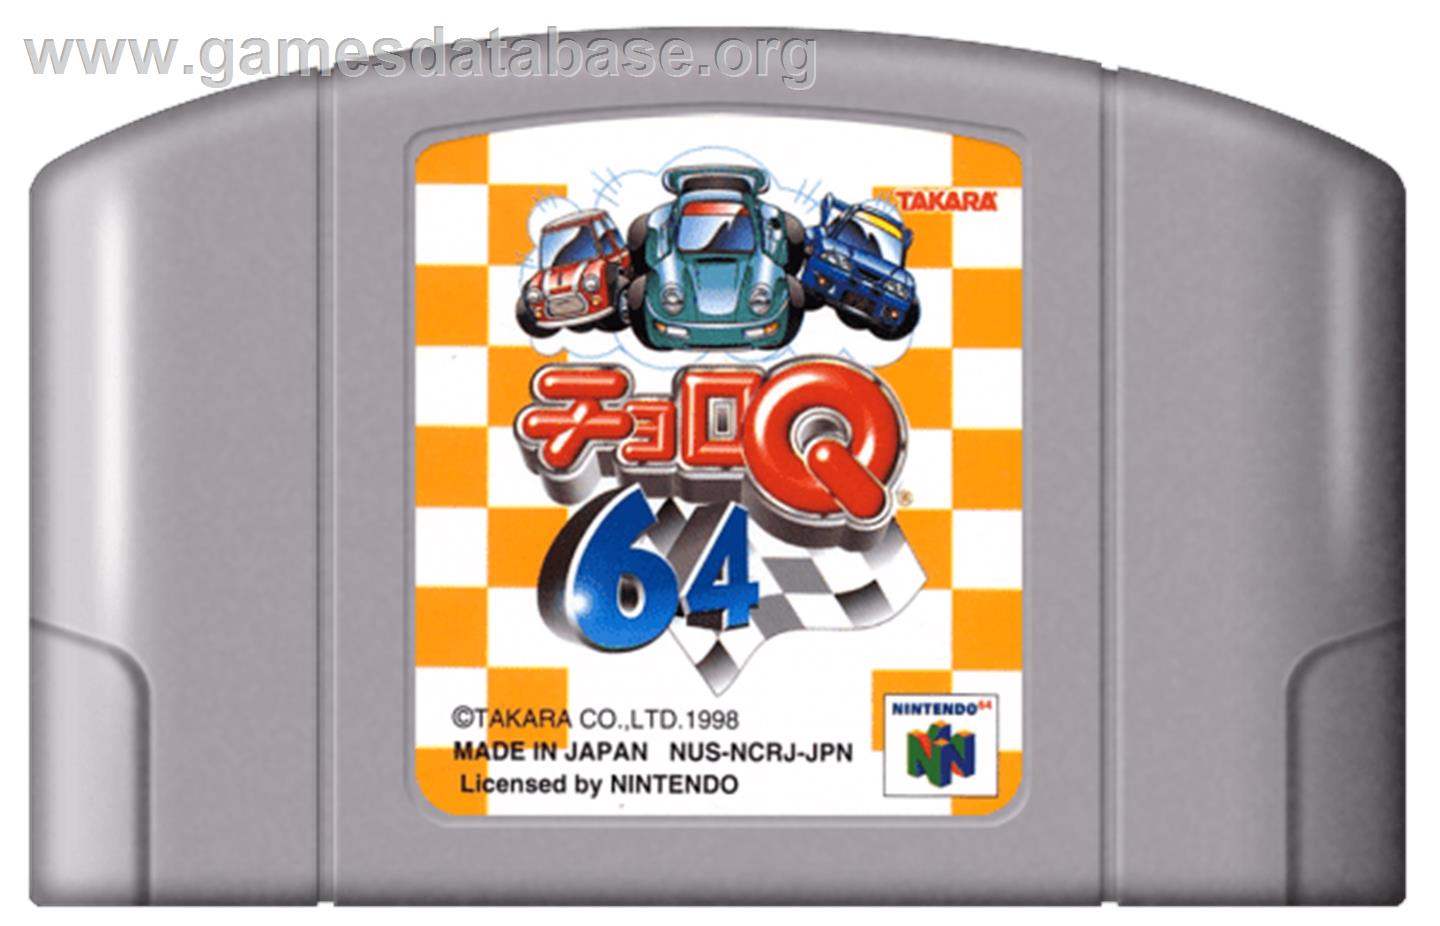 Choro Q 64 - Nintendo N64 - Artwork - Cartridge